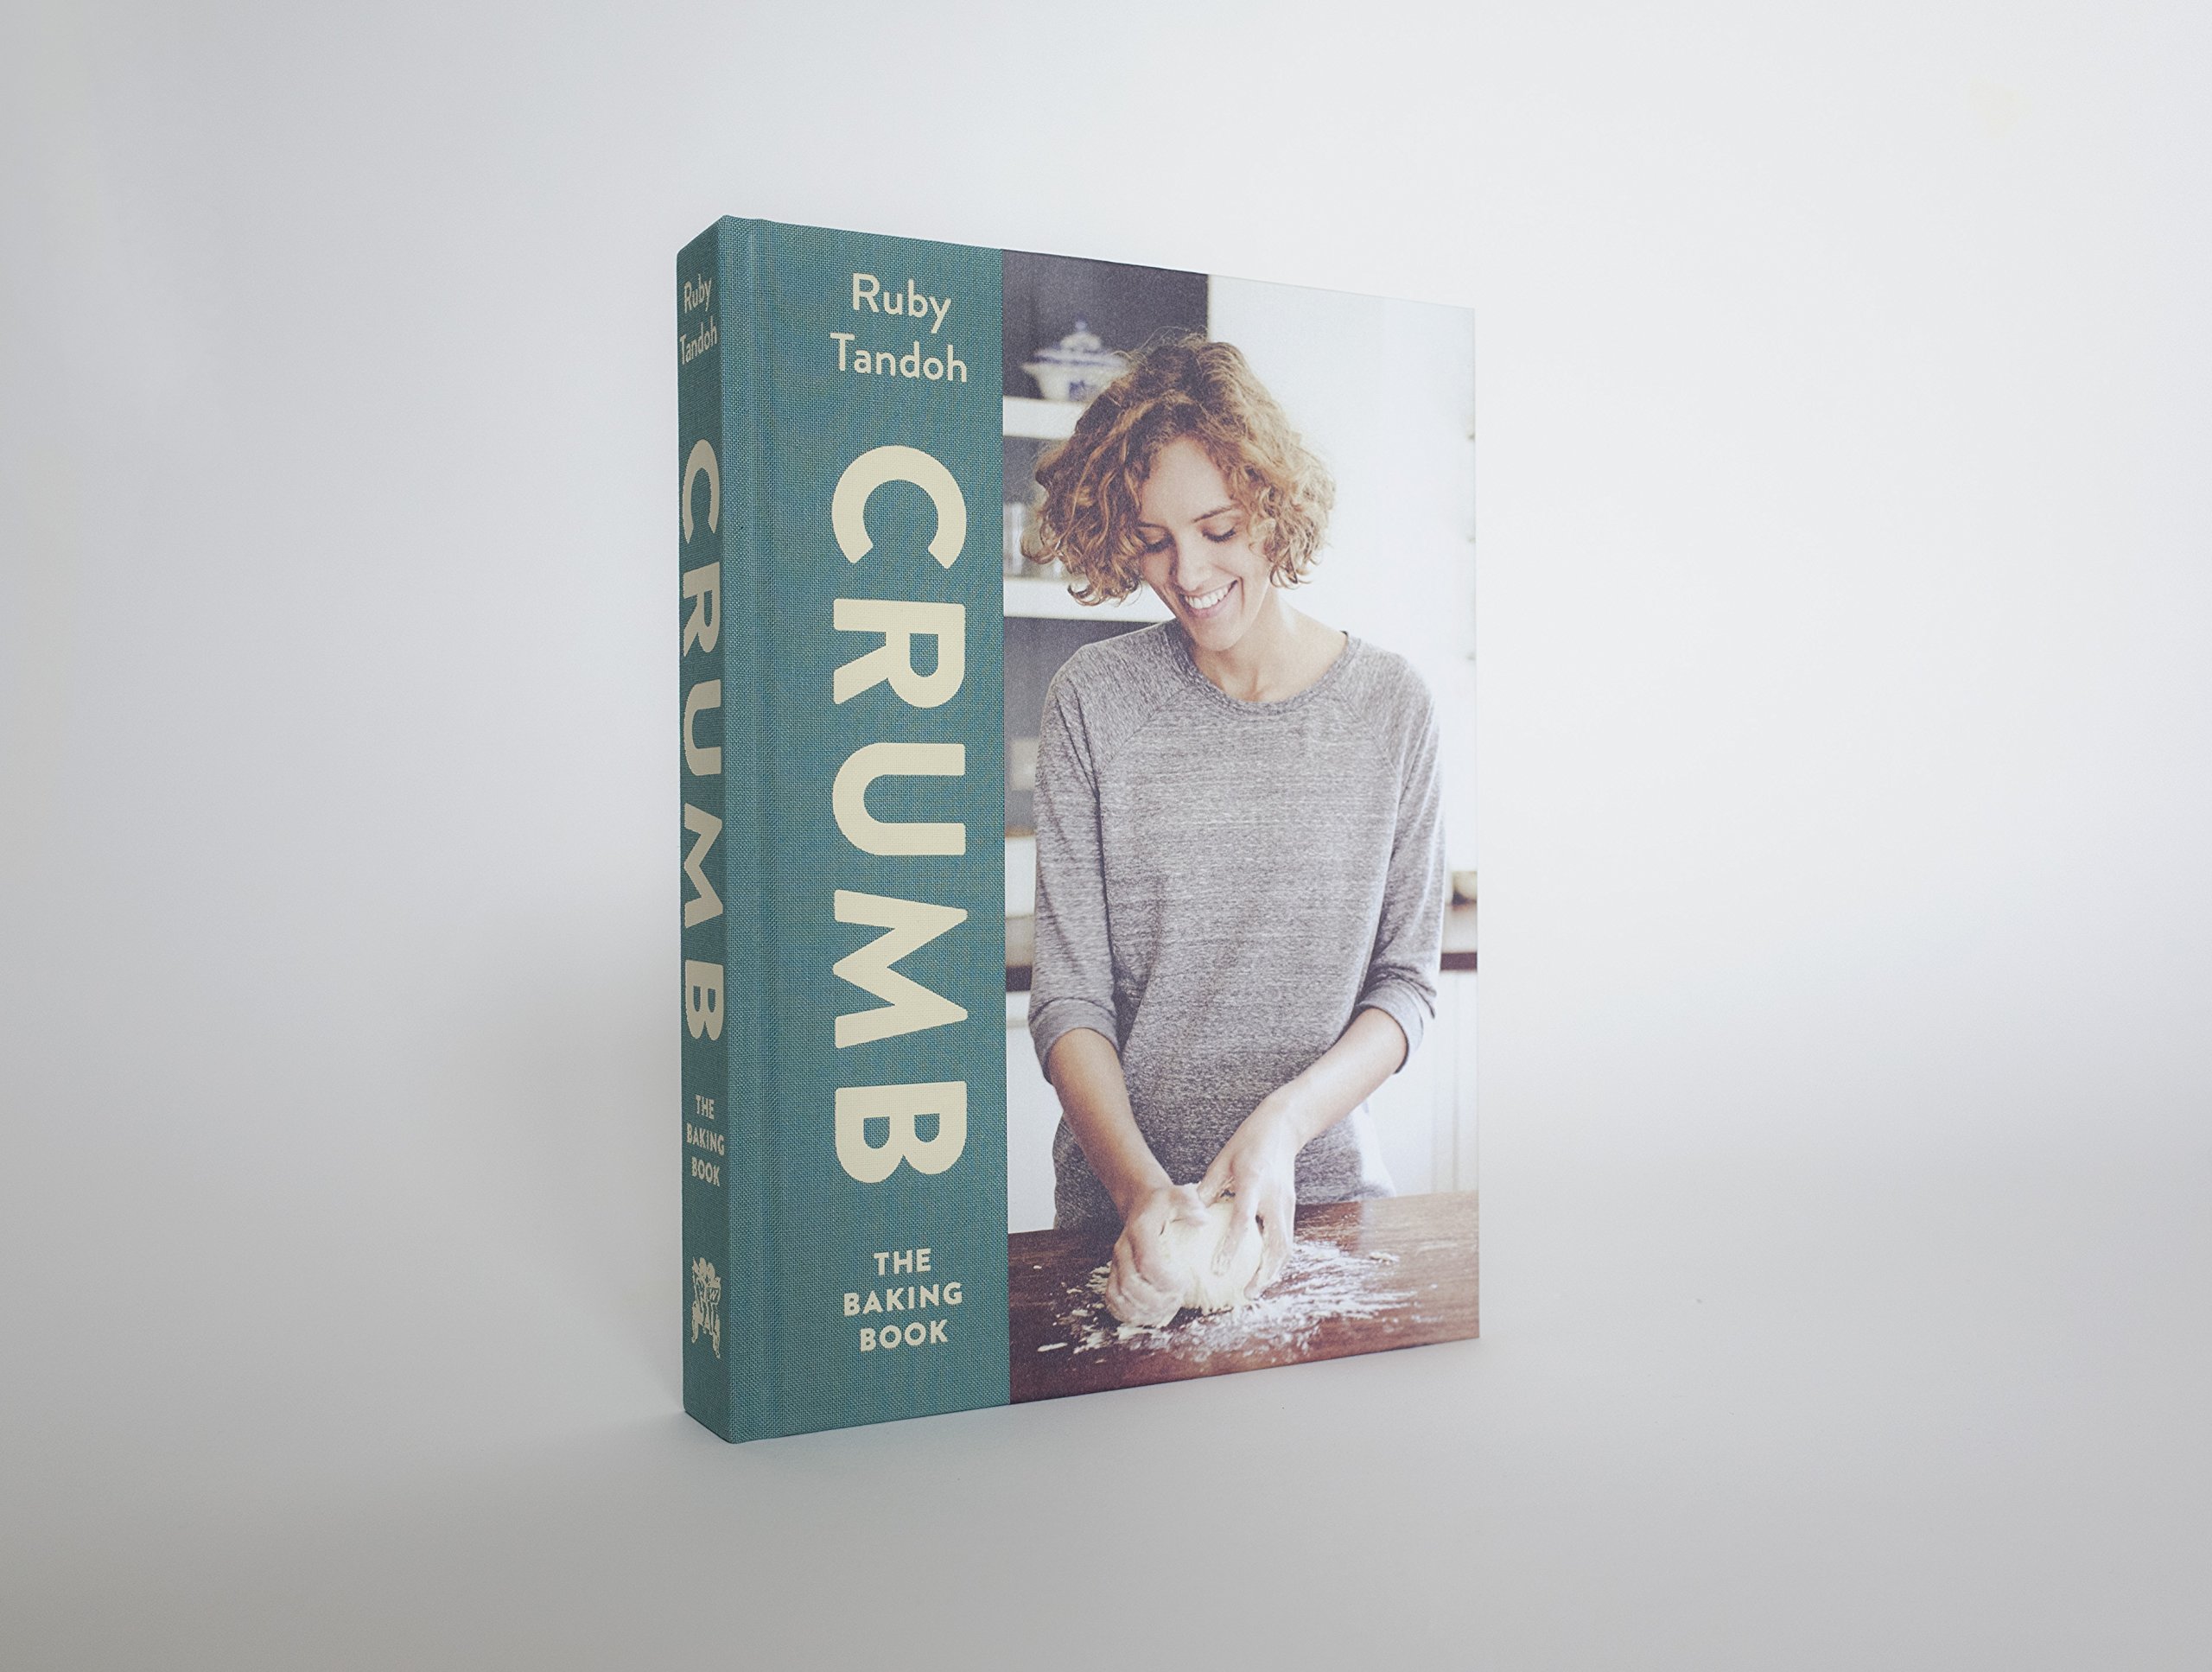 Crumb: The Baking Book: Amazon.co.uk: Ruby Tandoh: 9780701189310: Books